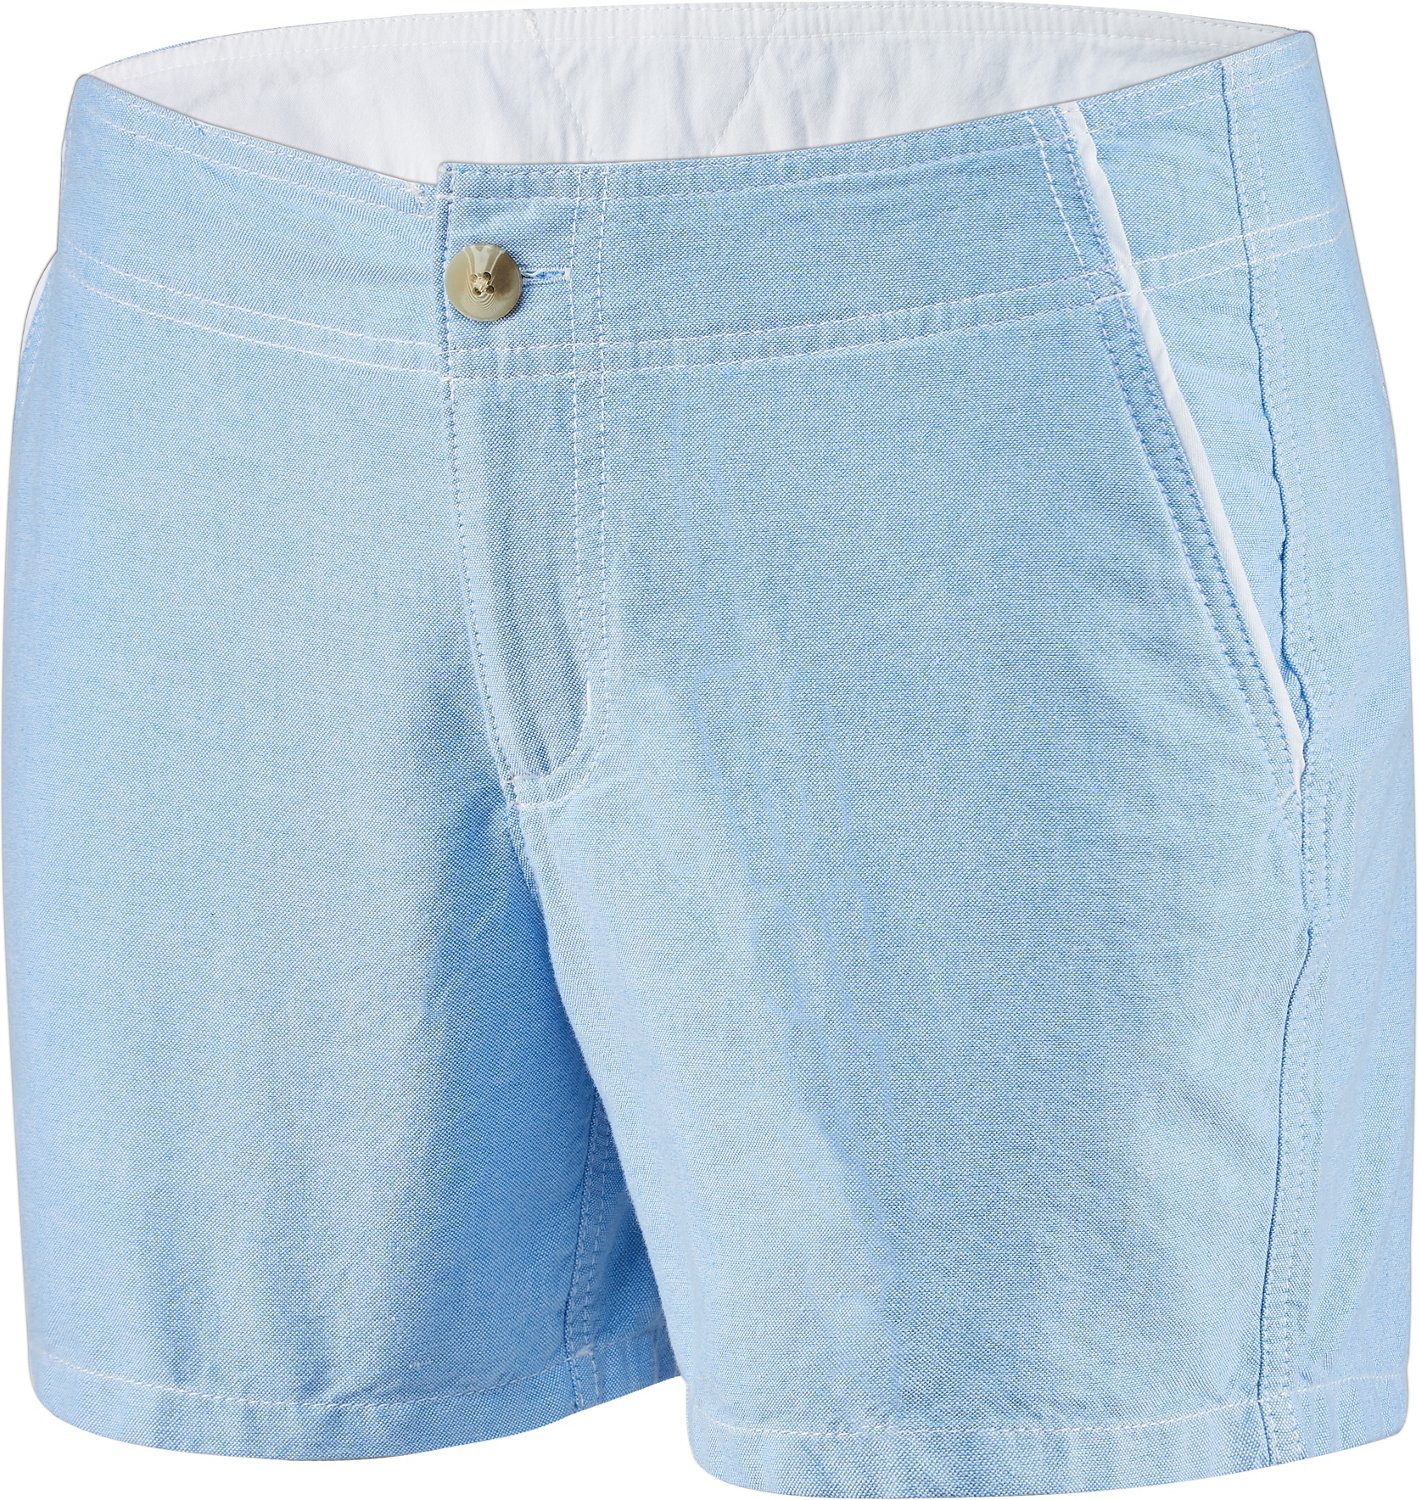 Women's Shorts | Shop Cargo & Khaki Shorts & Skirts for Women